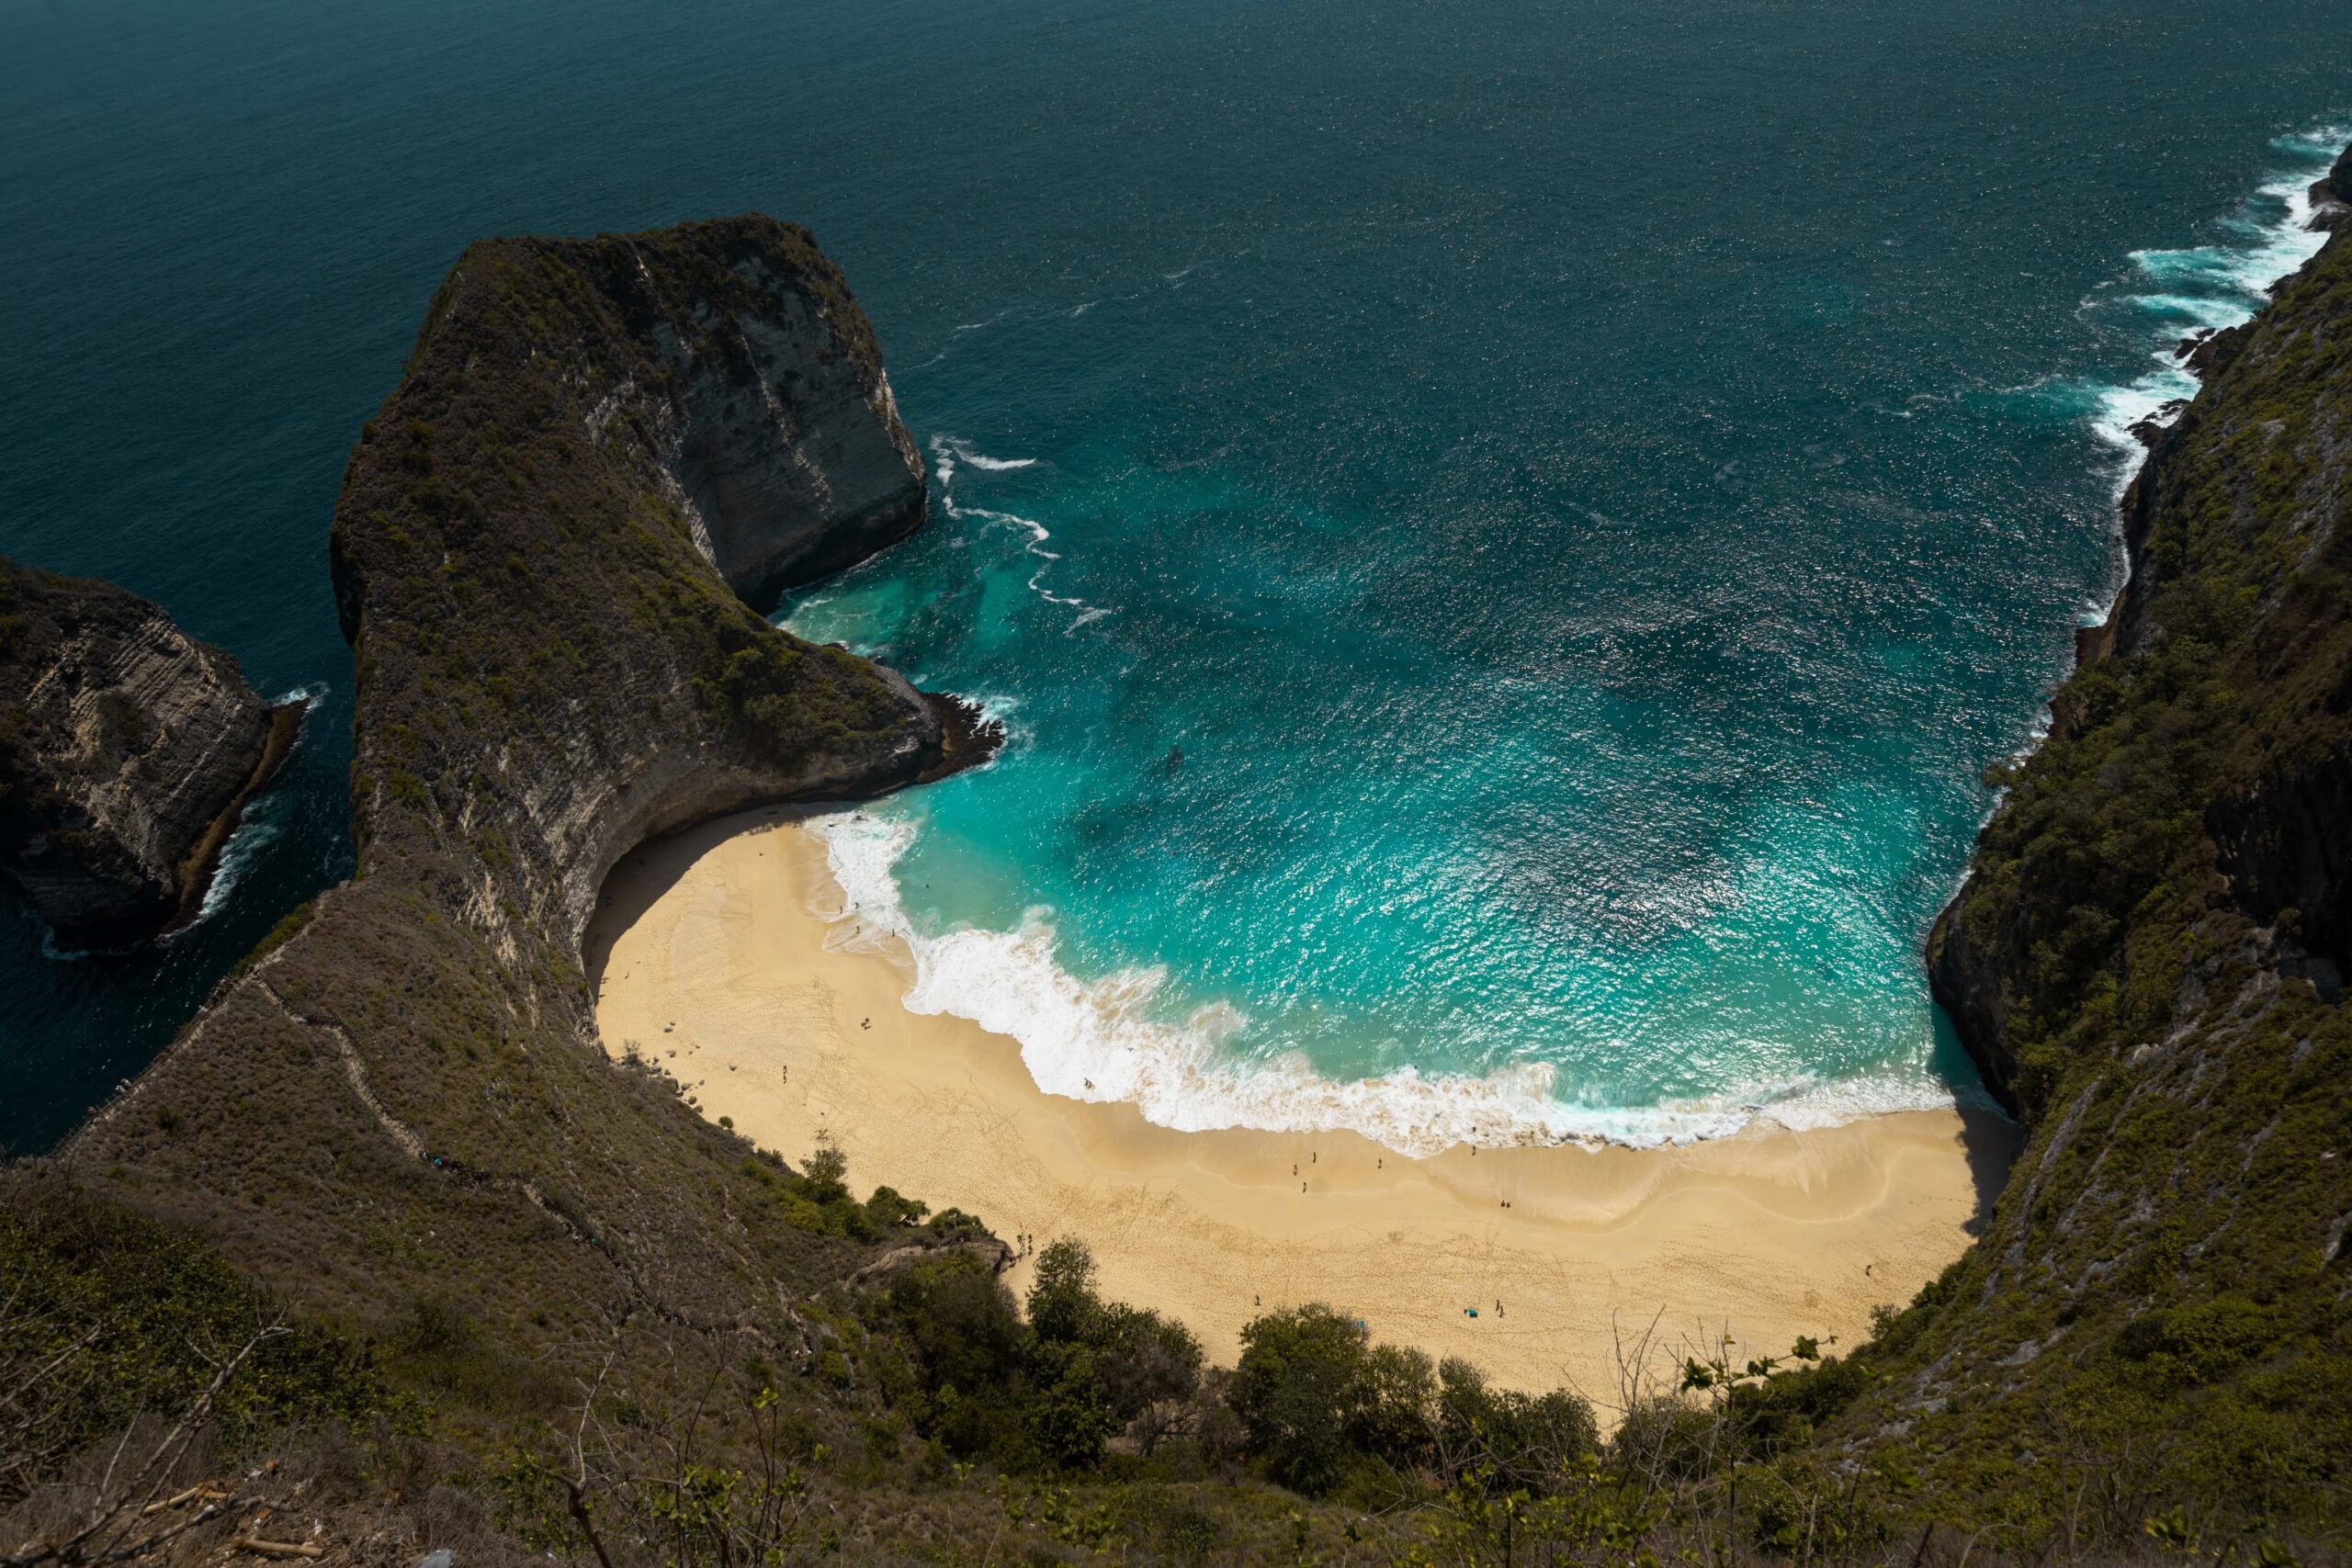 Nusa Penida, a small island off the coast of Bali (photo: Christoph Smahel)